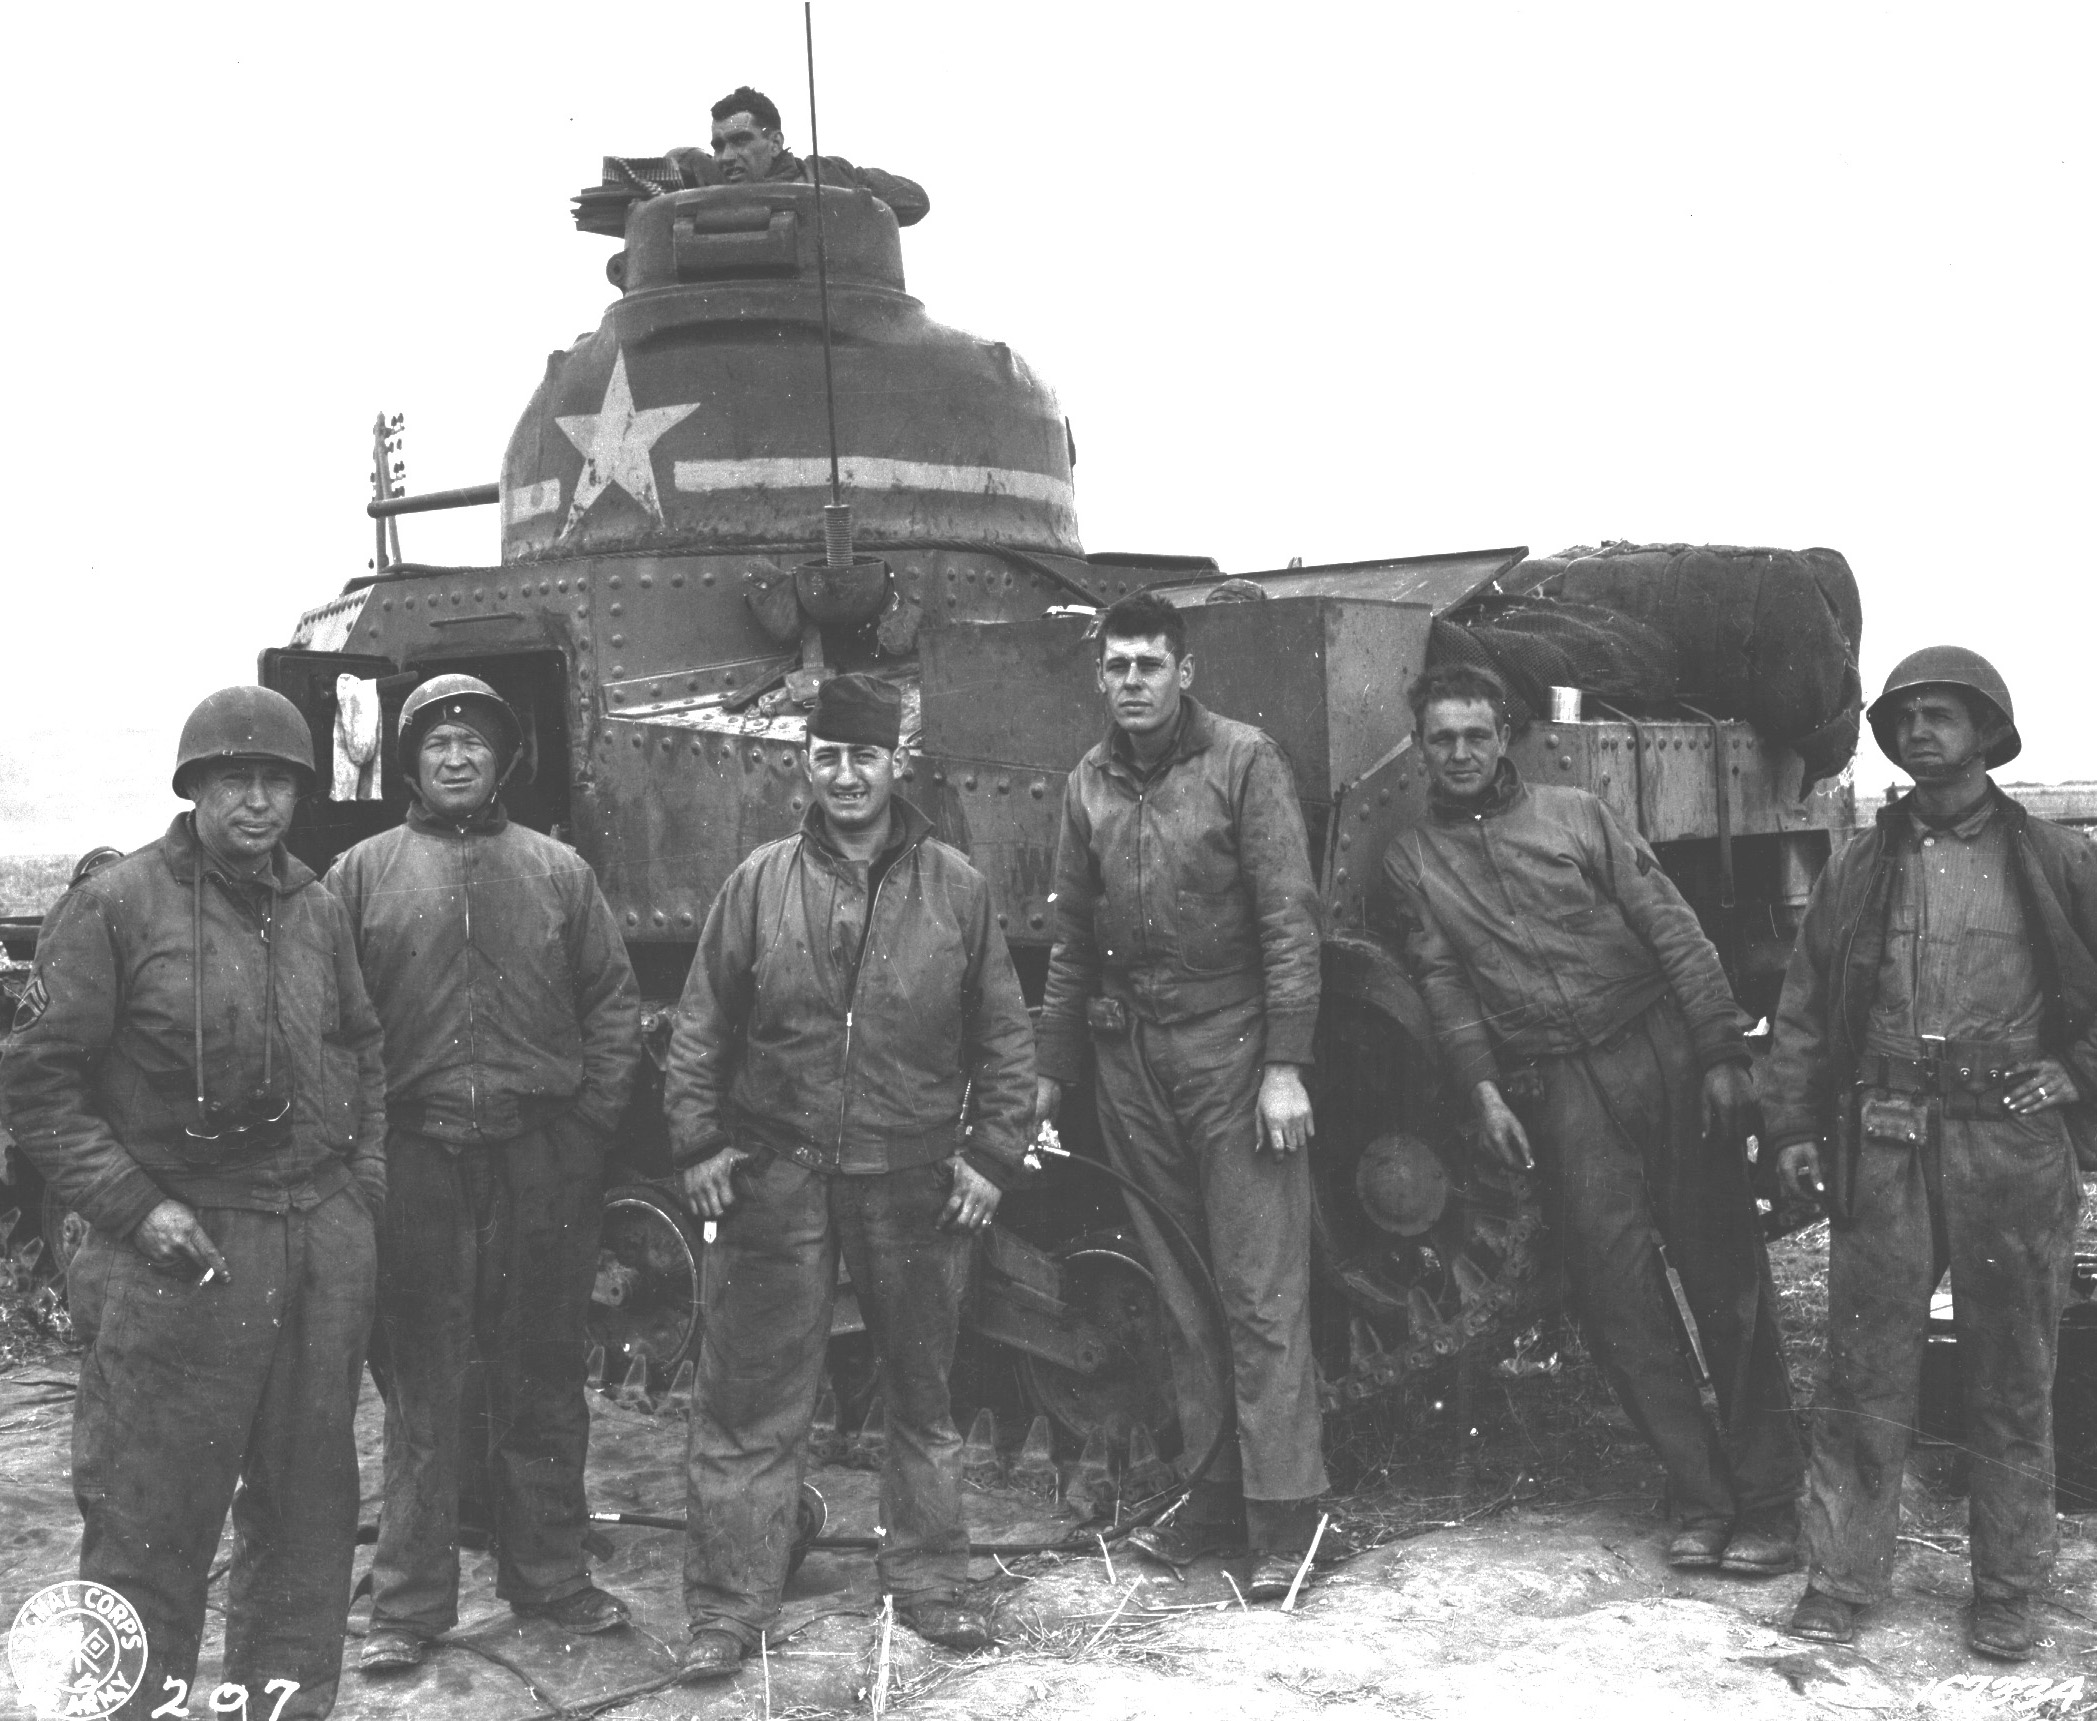 M3 medium tank number 309490 of D Company, 2nd Battalion, 13th Armored Regiment, US 1st Division at Souk el Arba, Tunisia, 23 Nov 1942, photo 1 of 3